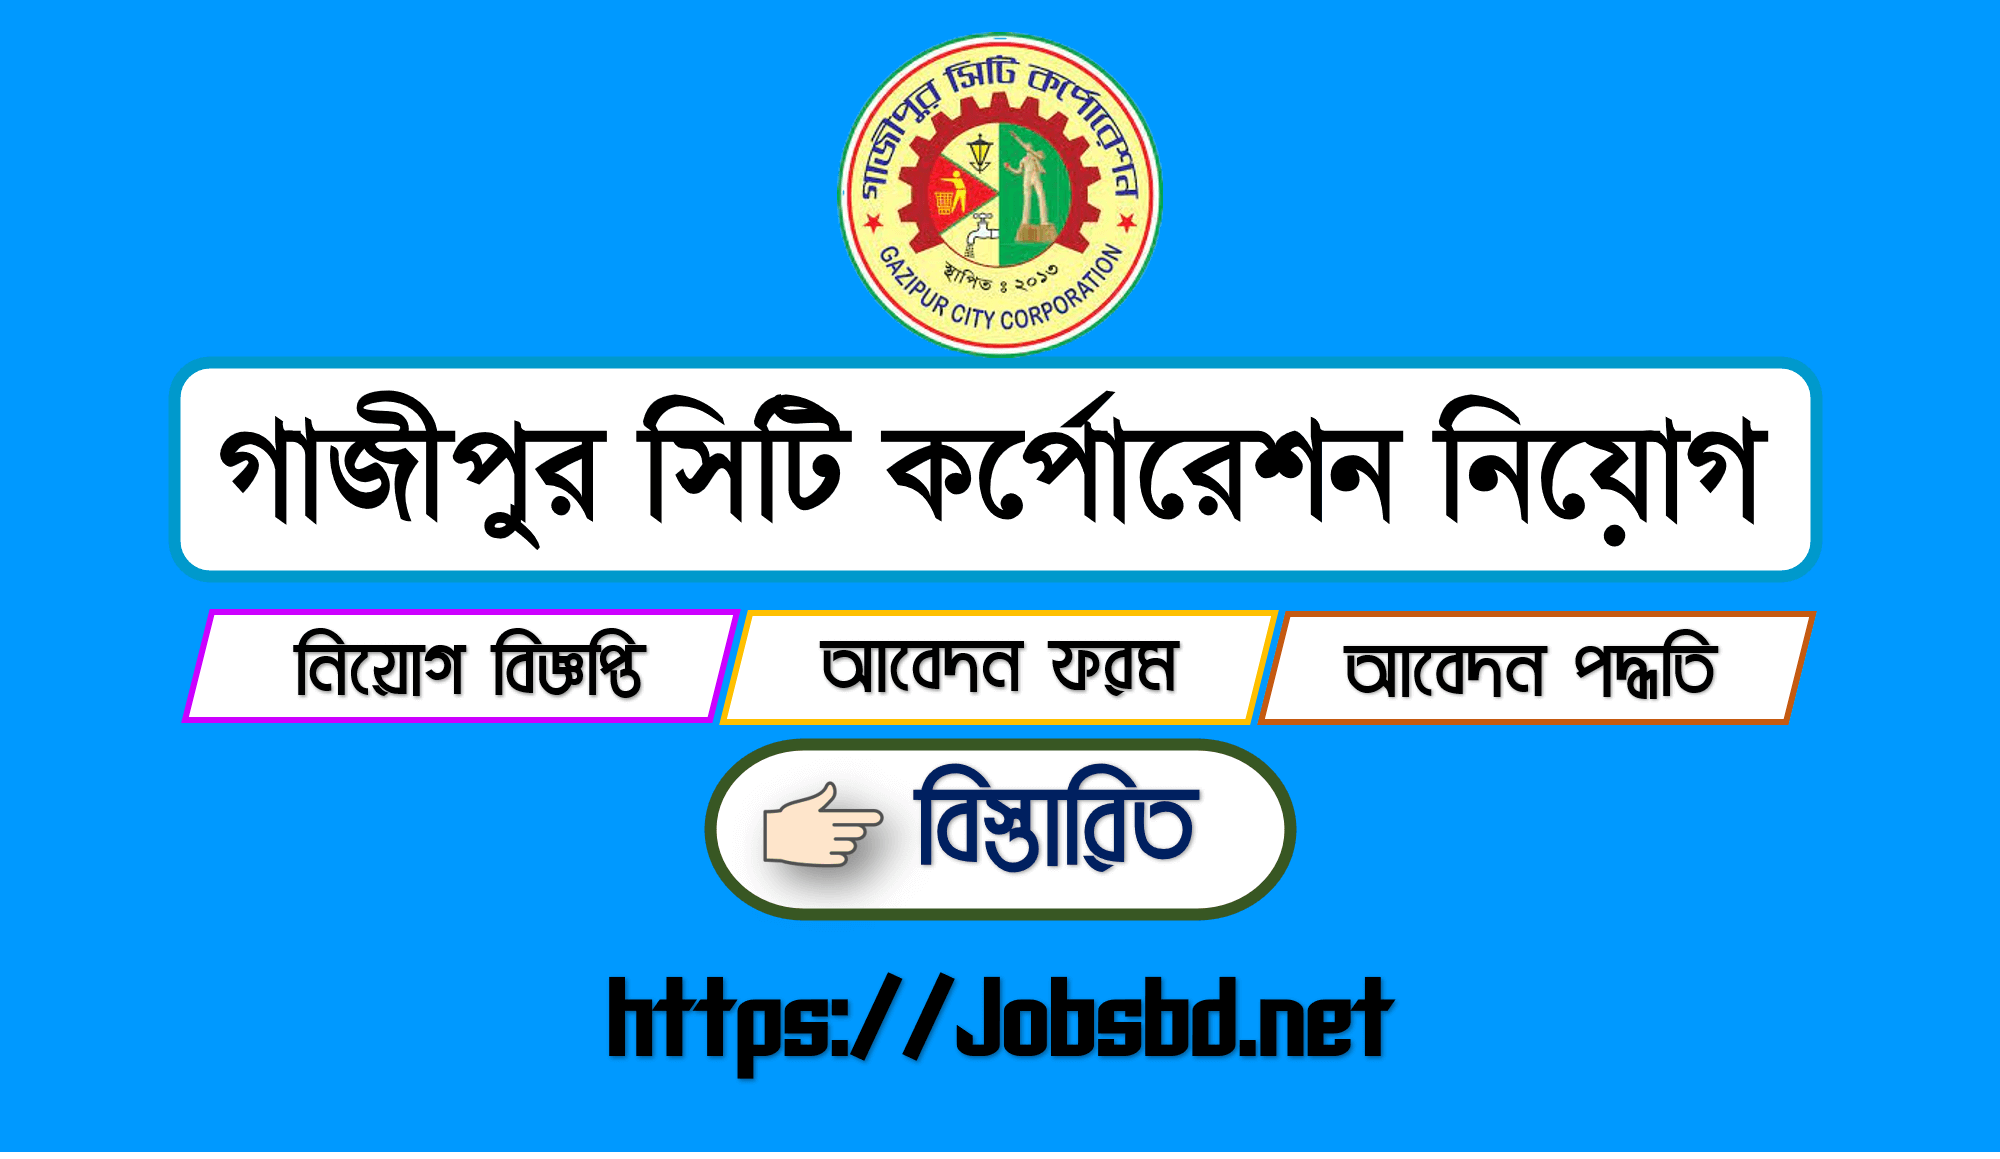 Gazipur City Corporation Jobs Circular